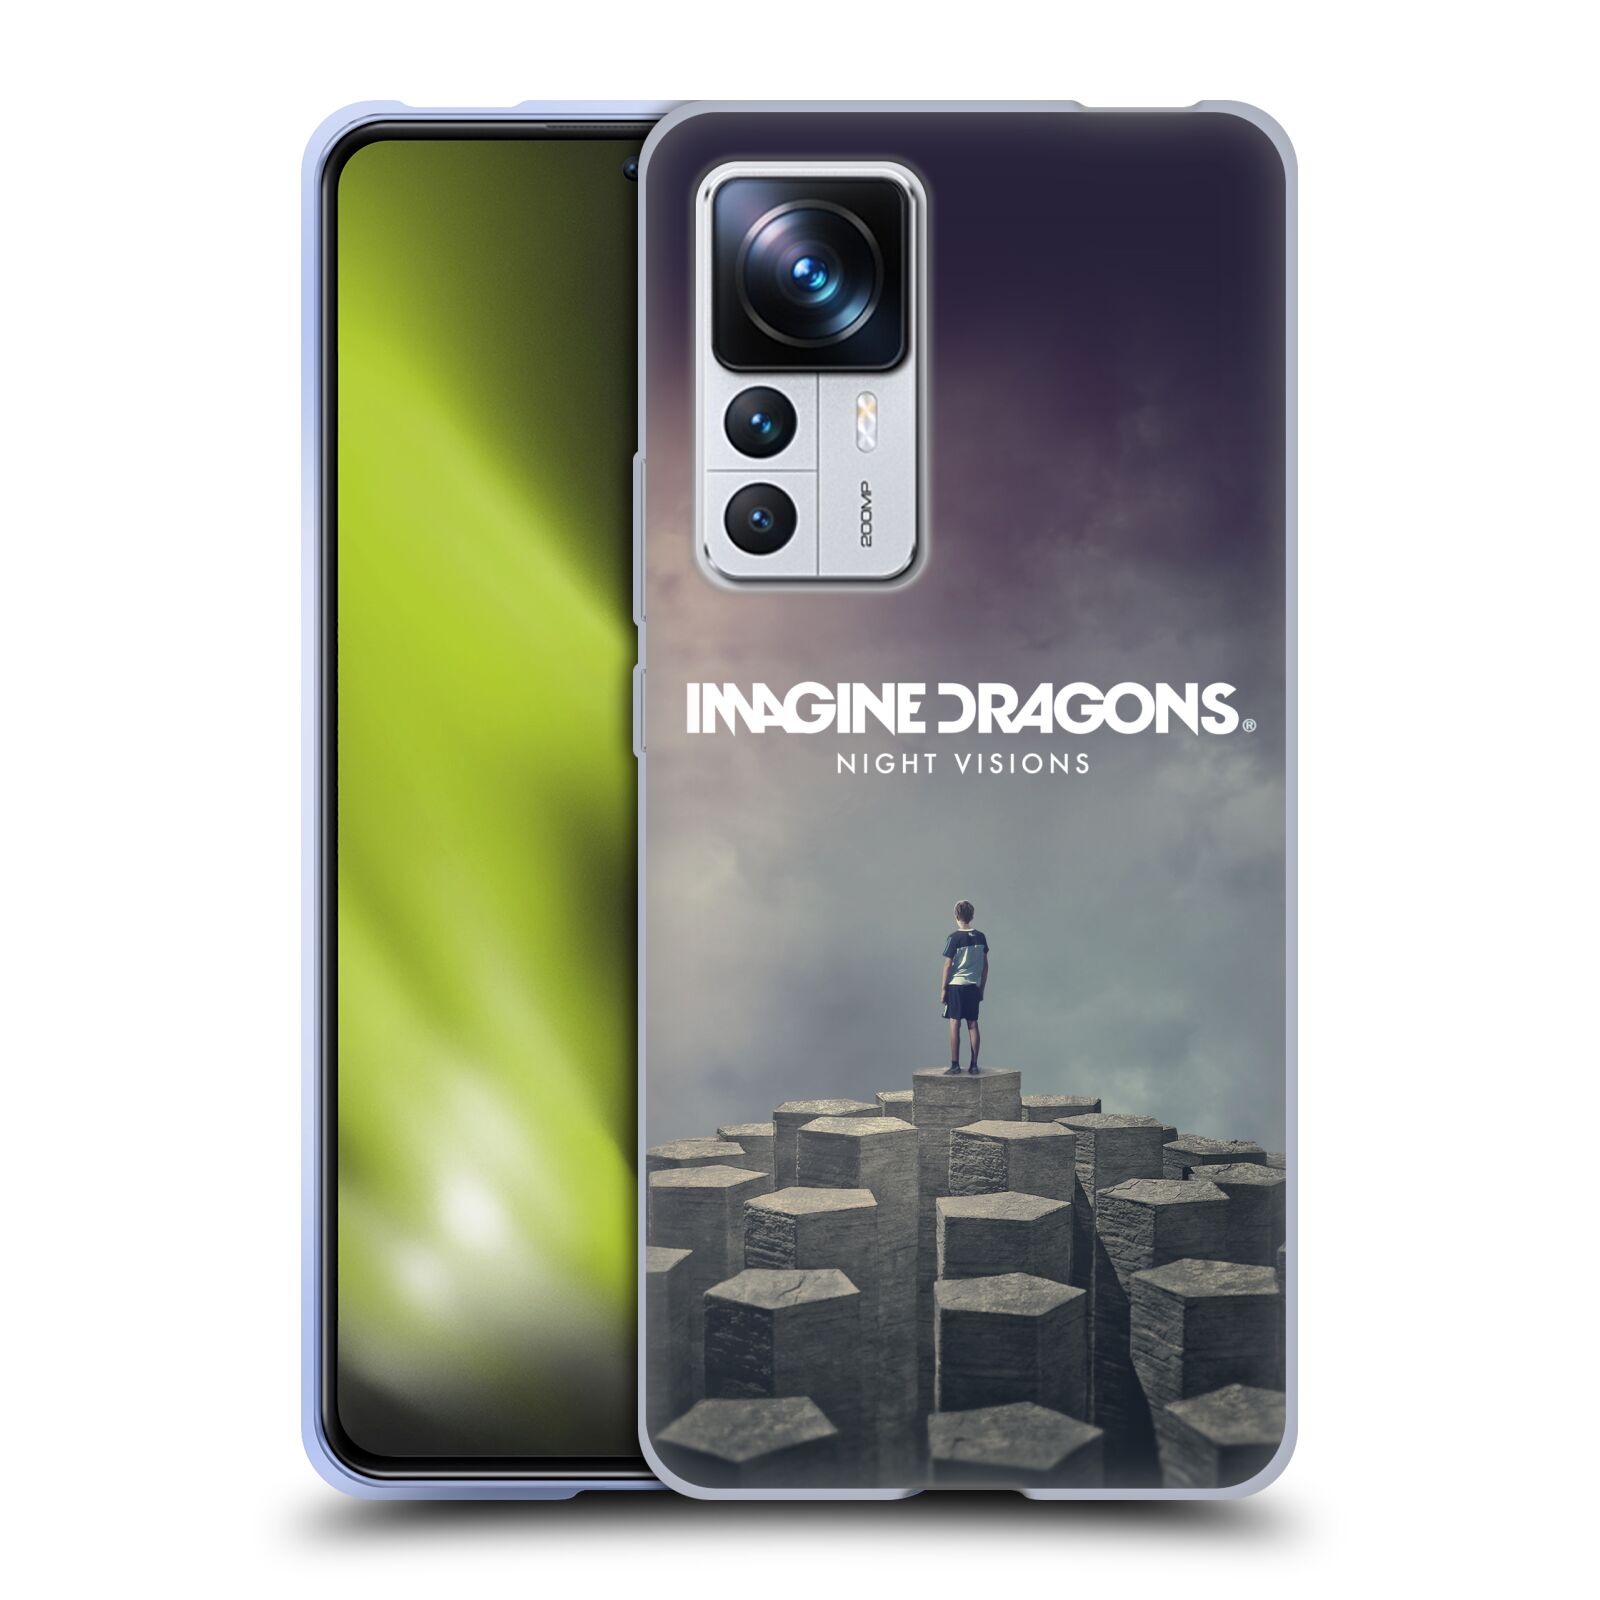 Silikonové pouzdro na mobil Xiaomi 12T / 12T Pro - Imagine Dragons - Night Visions (Silikonový kryt, obal, pouzdro na mobilní telefon Xiaomi 12T / 12T Pro s licencovaným motivem Imagine Dragons - Night Visions)